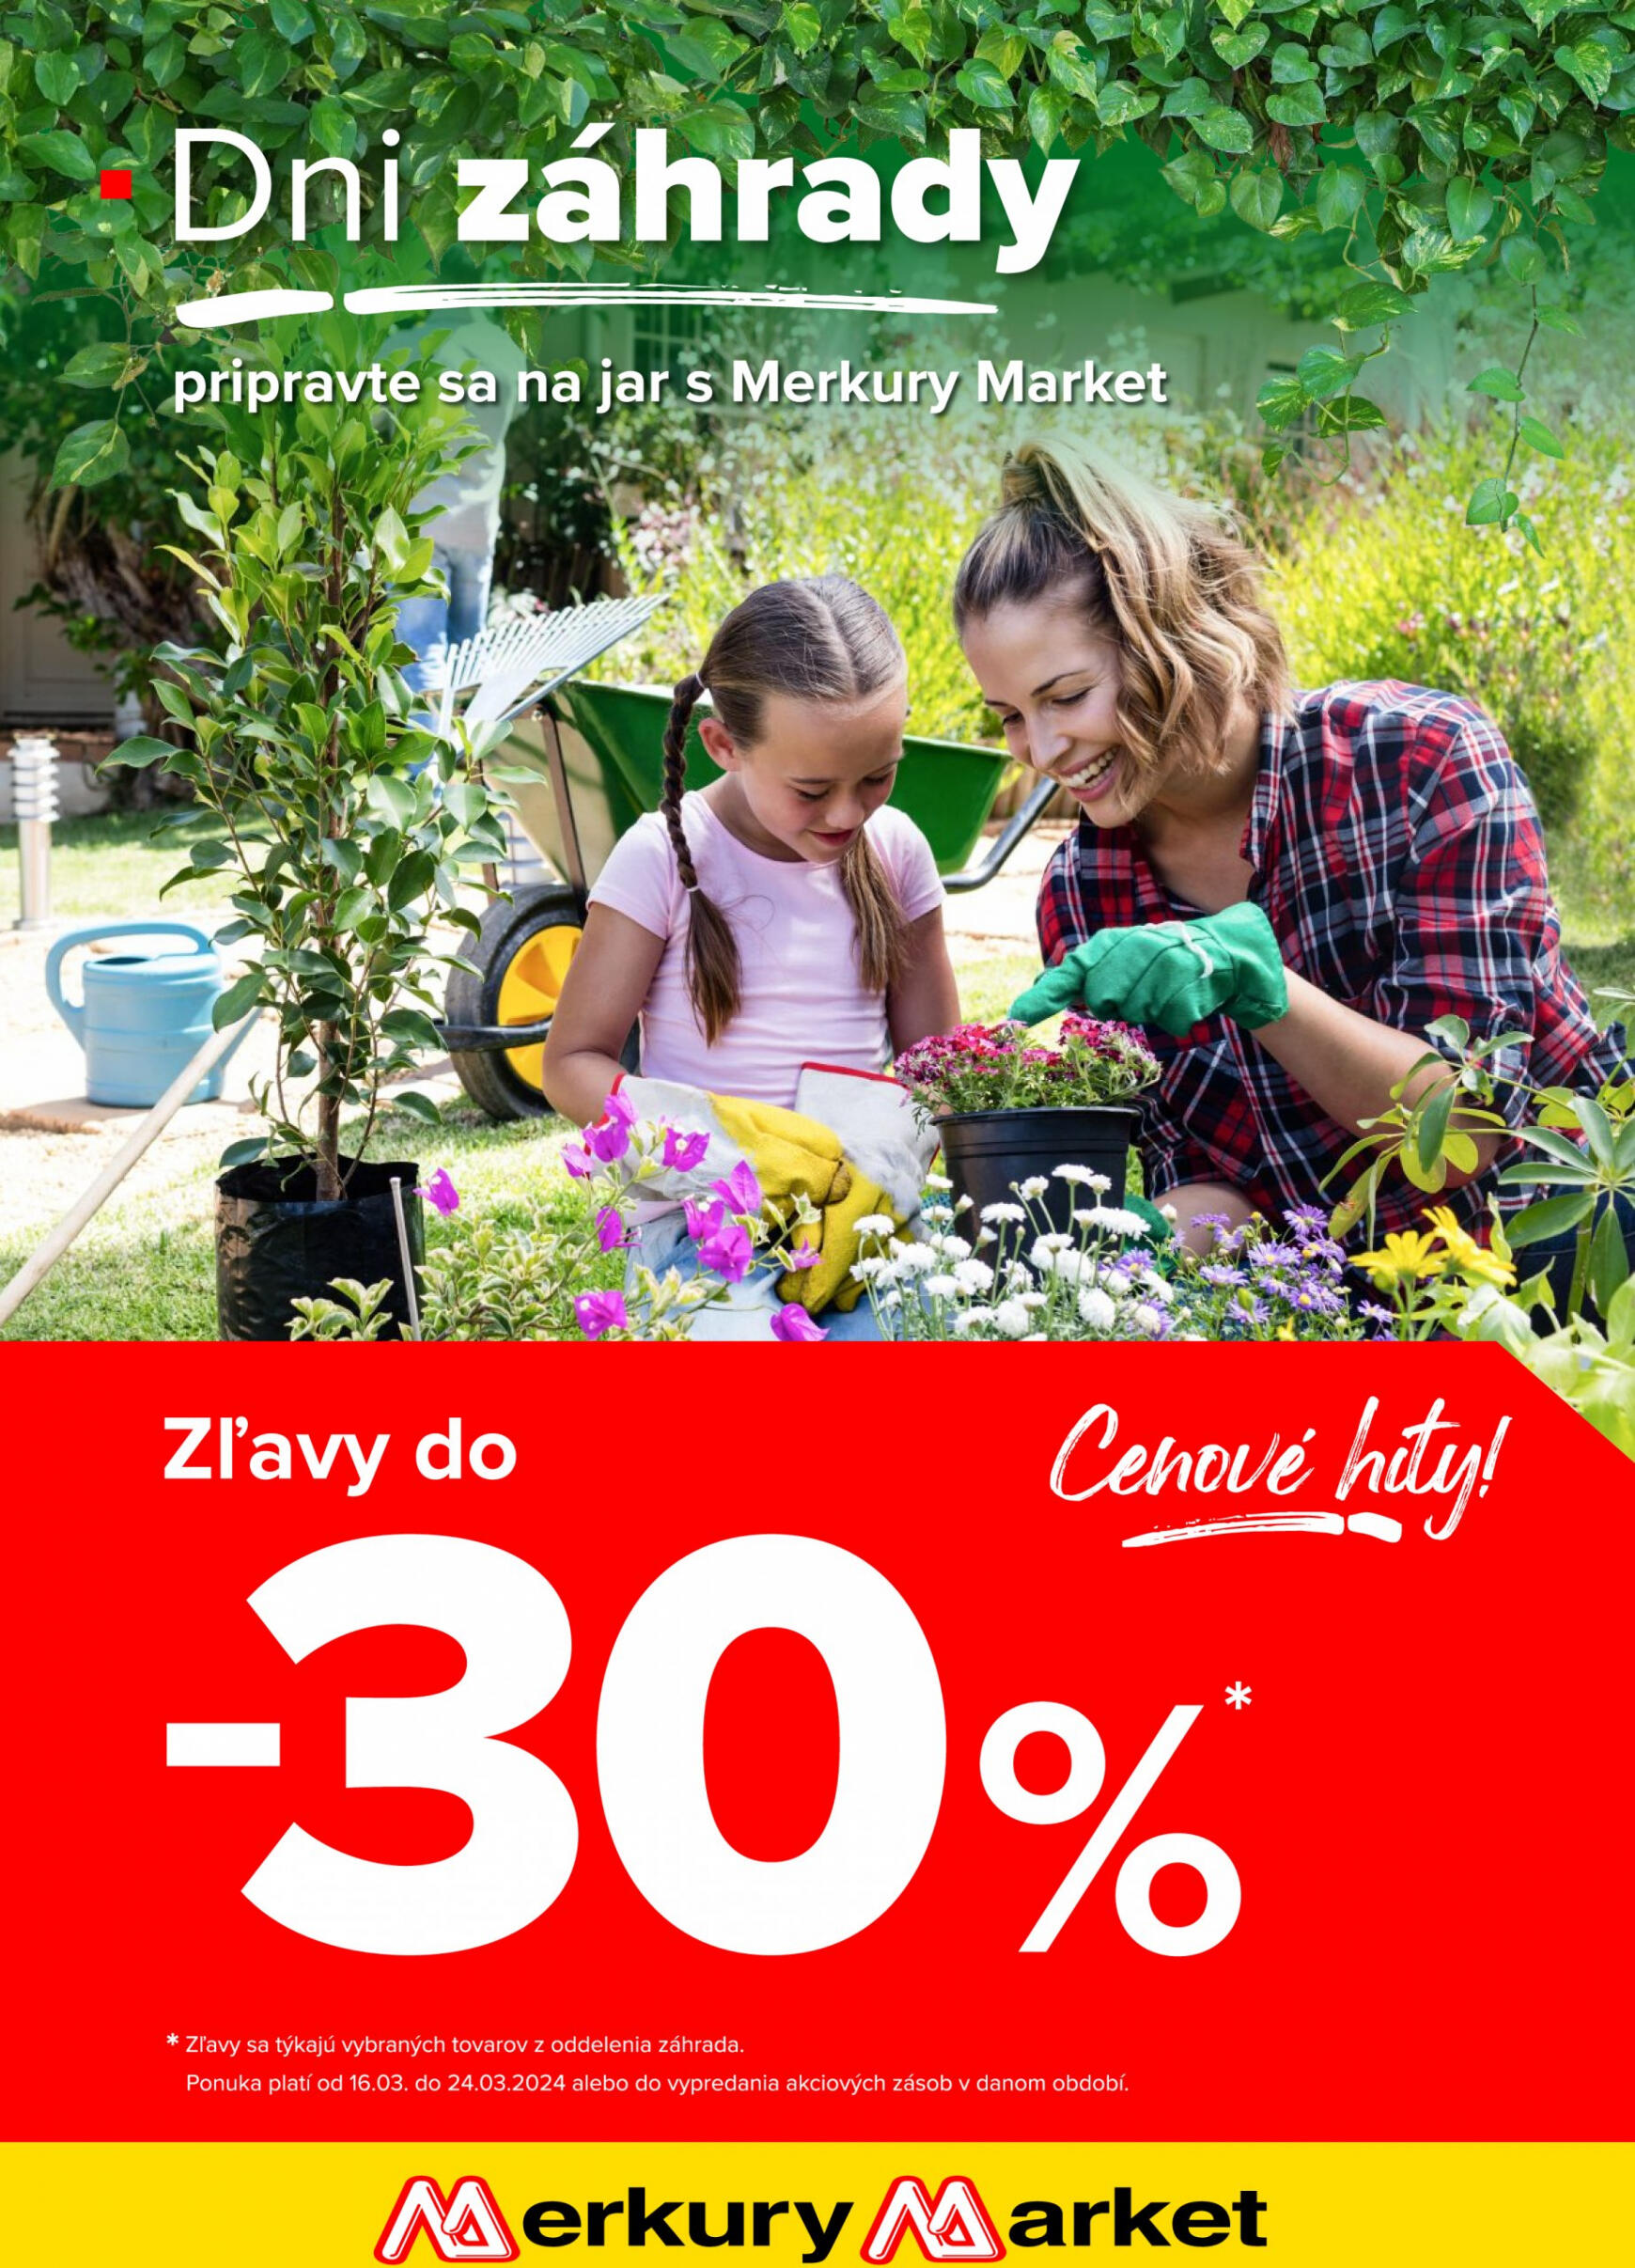 merkury-market - Merkury Market - Dni záhrady platný od 16.03.2024